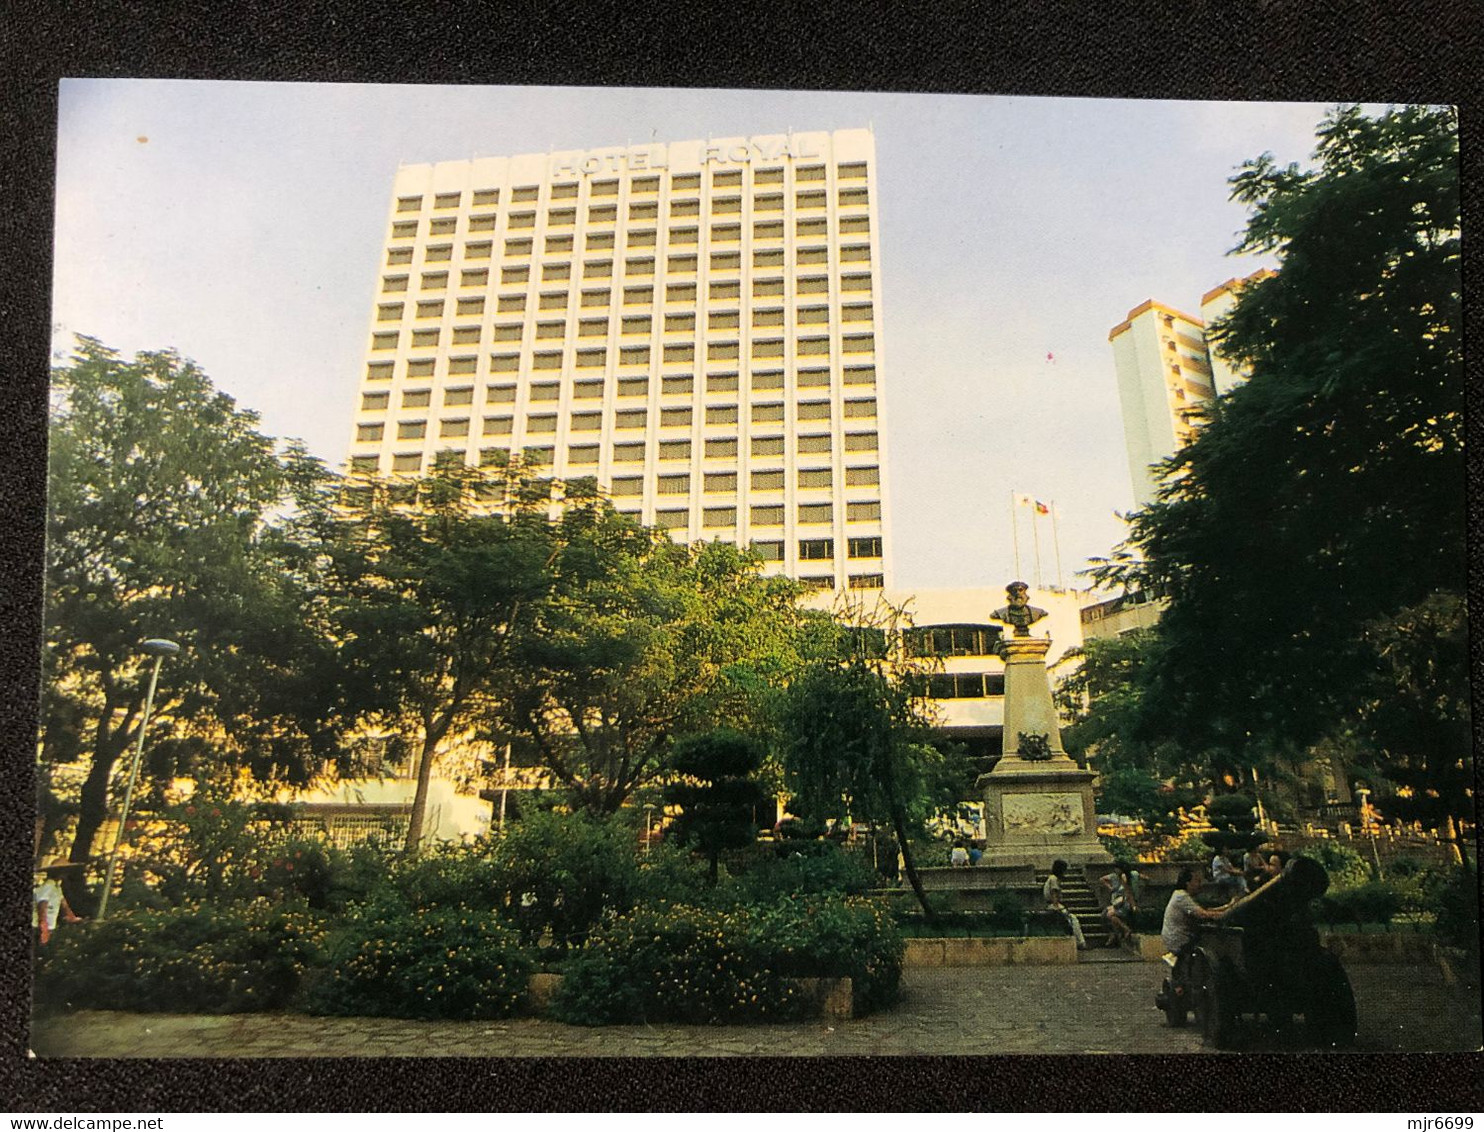 MACAU 60\70'S VASCO DA GAMA MONUMENT & HOTEL VIEW POST CARD. #203-B - Macao